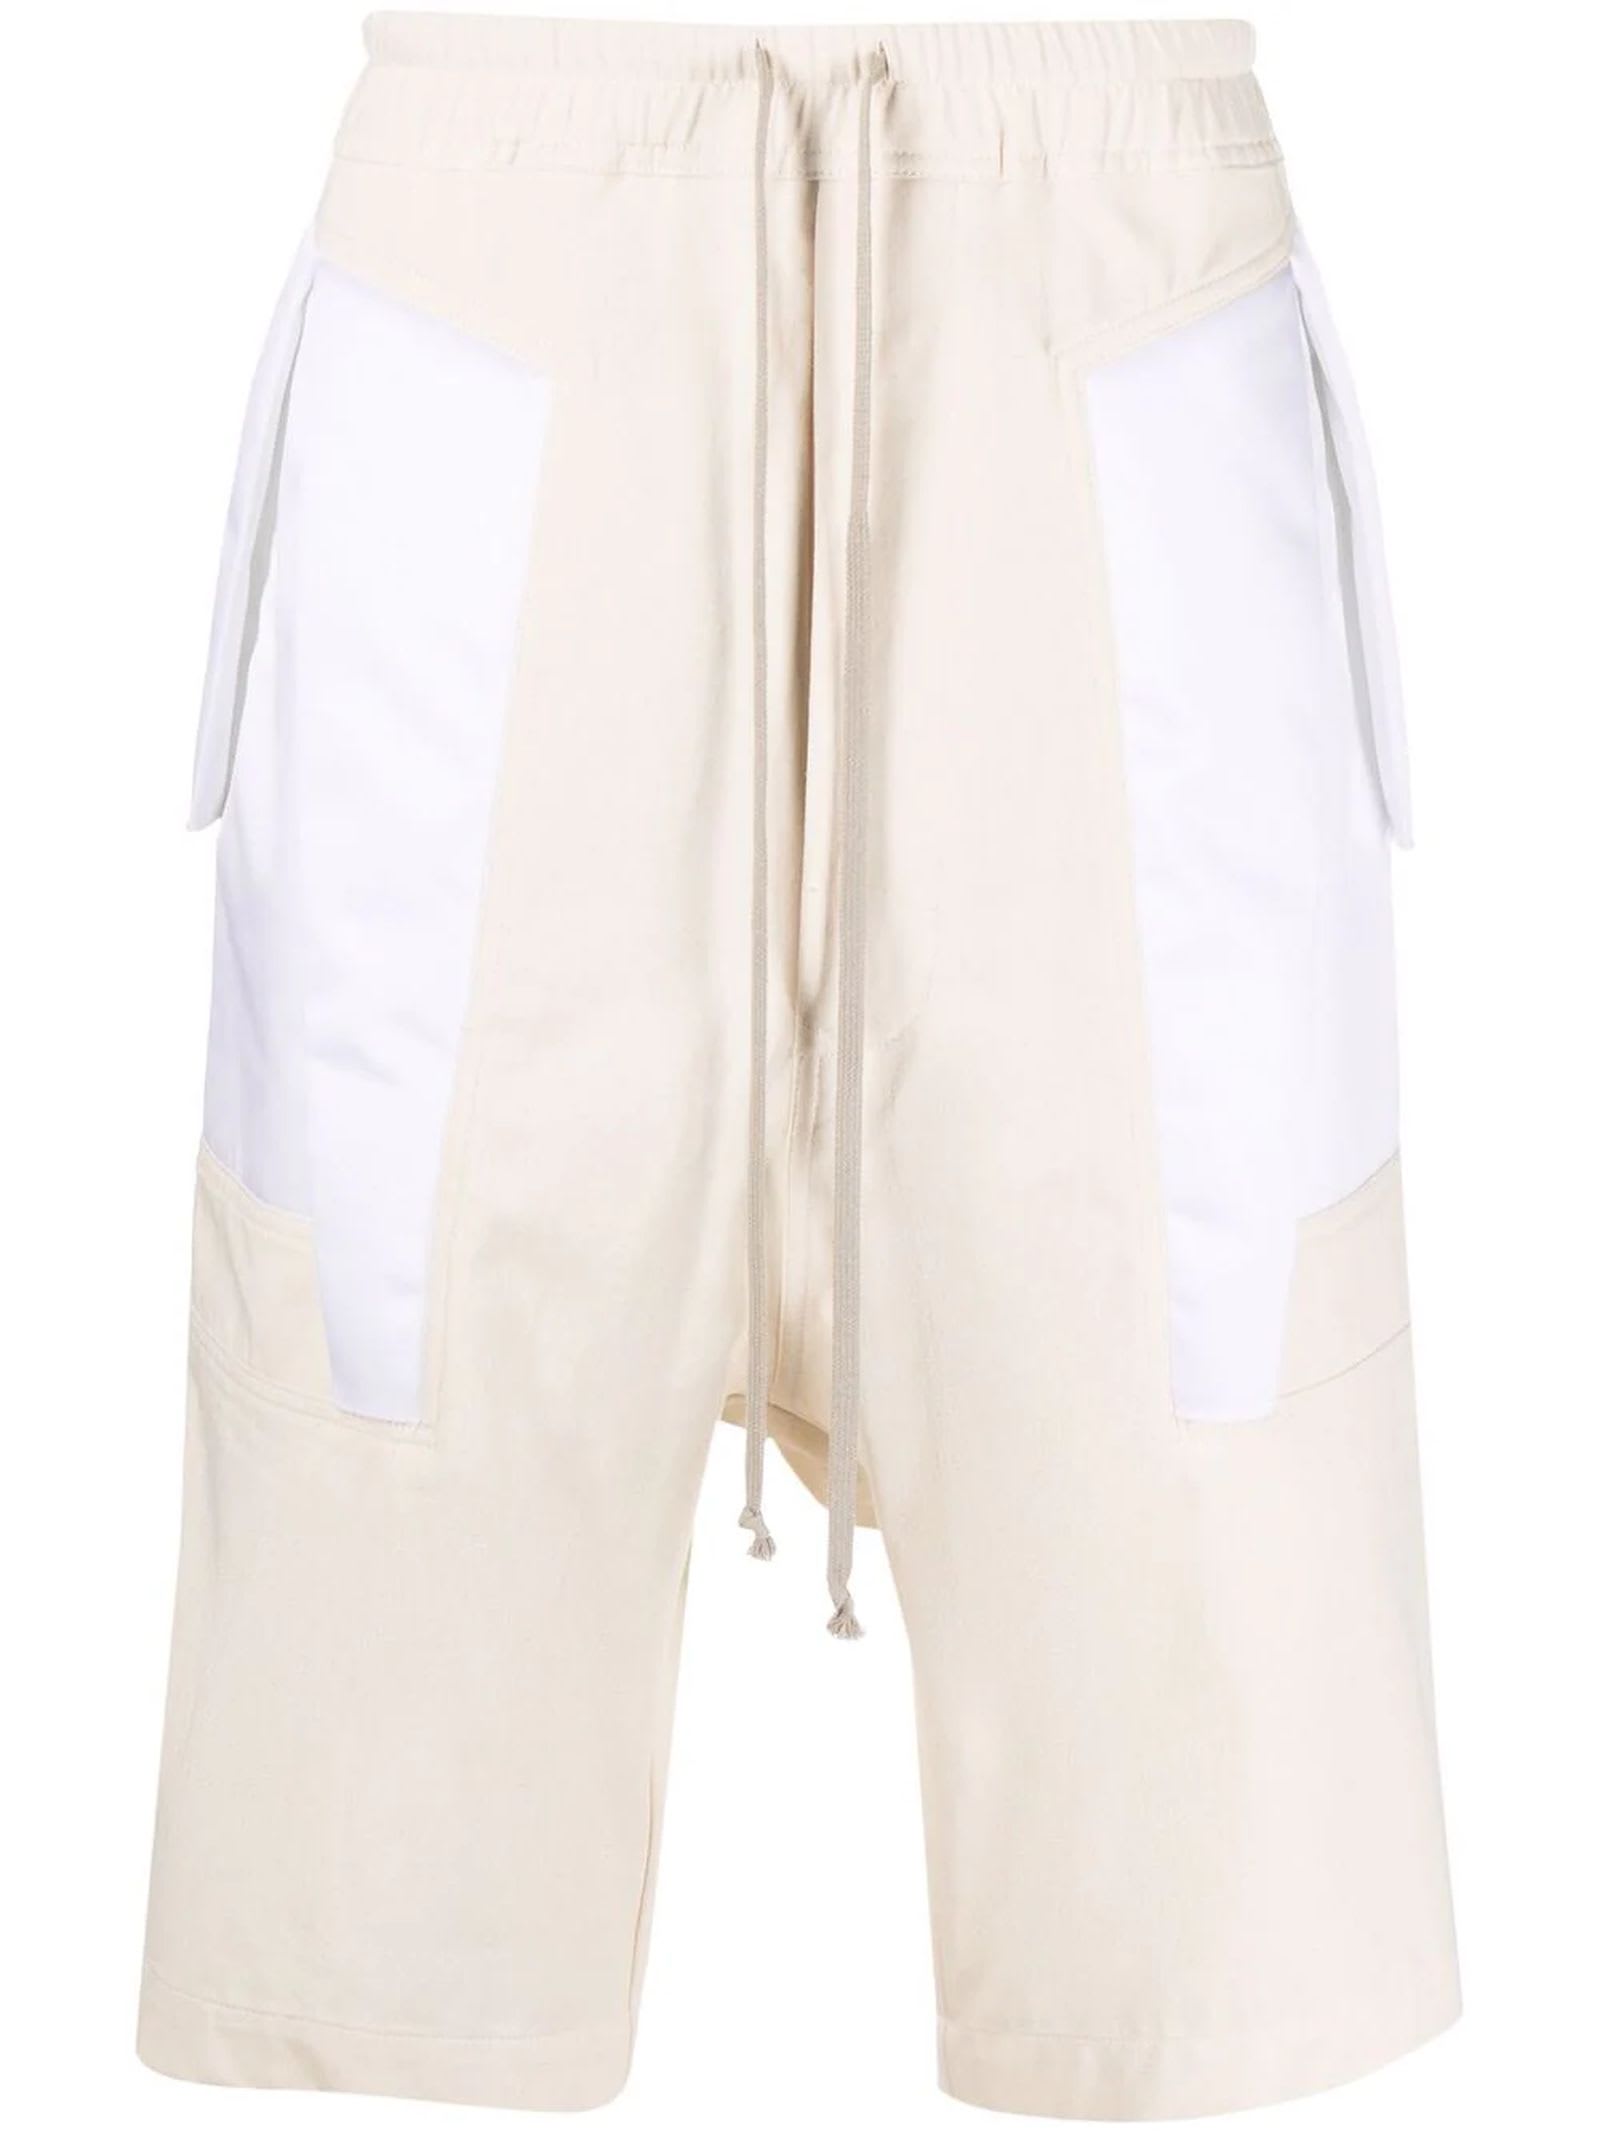 Rick Owens White Cotton Shorts